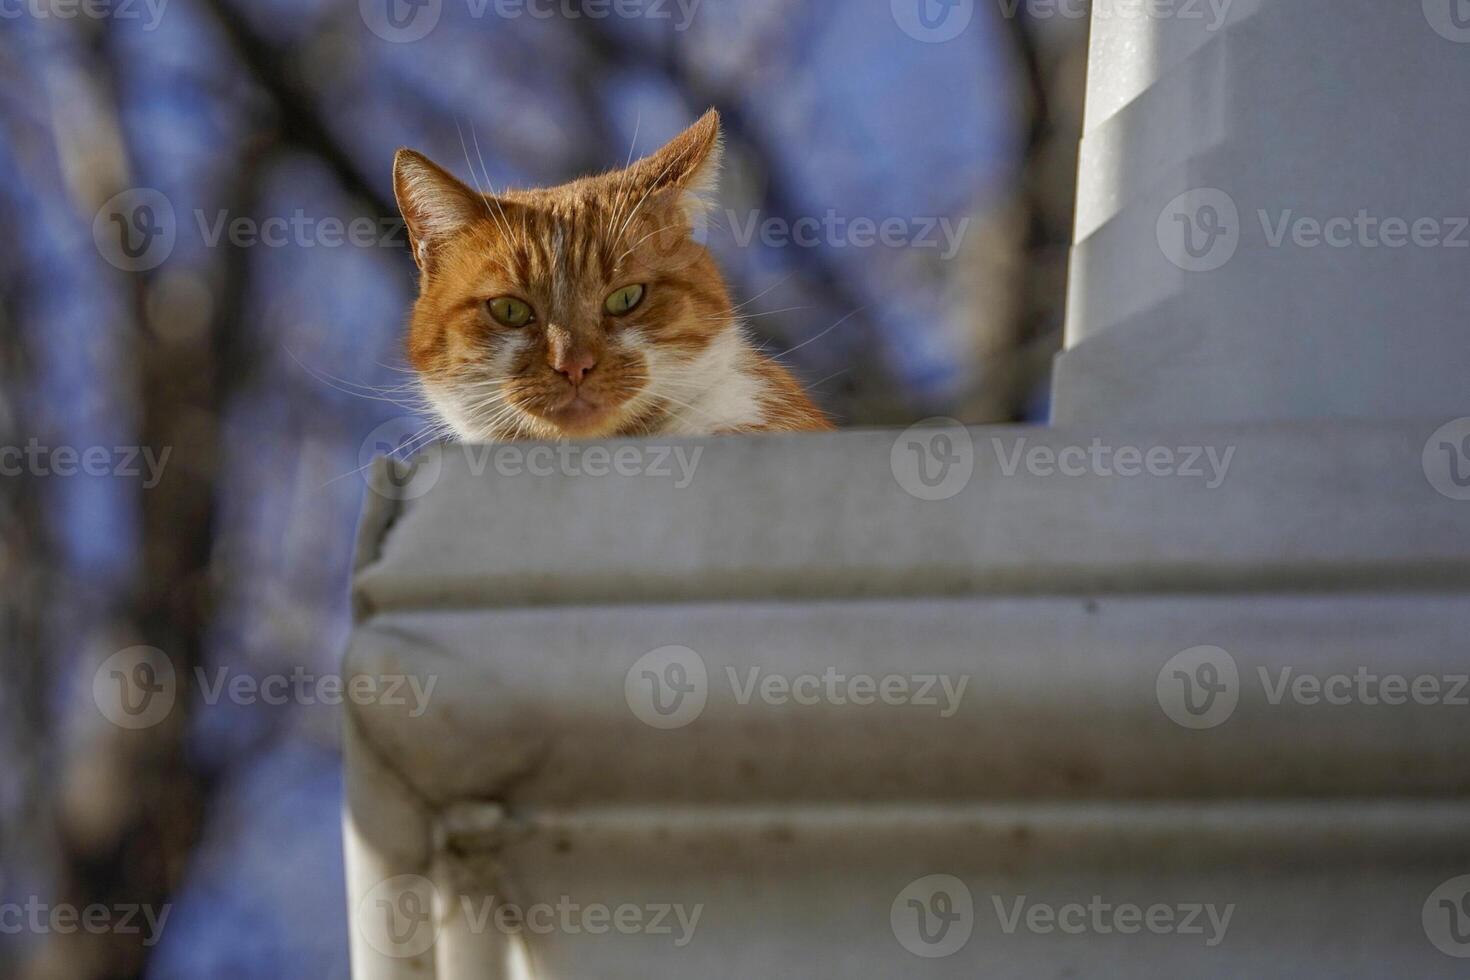 verdwaald kat van Istanbul straat portret foto